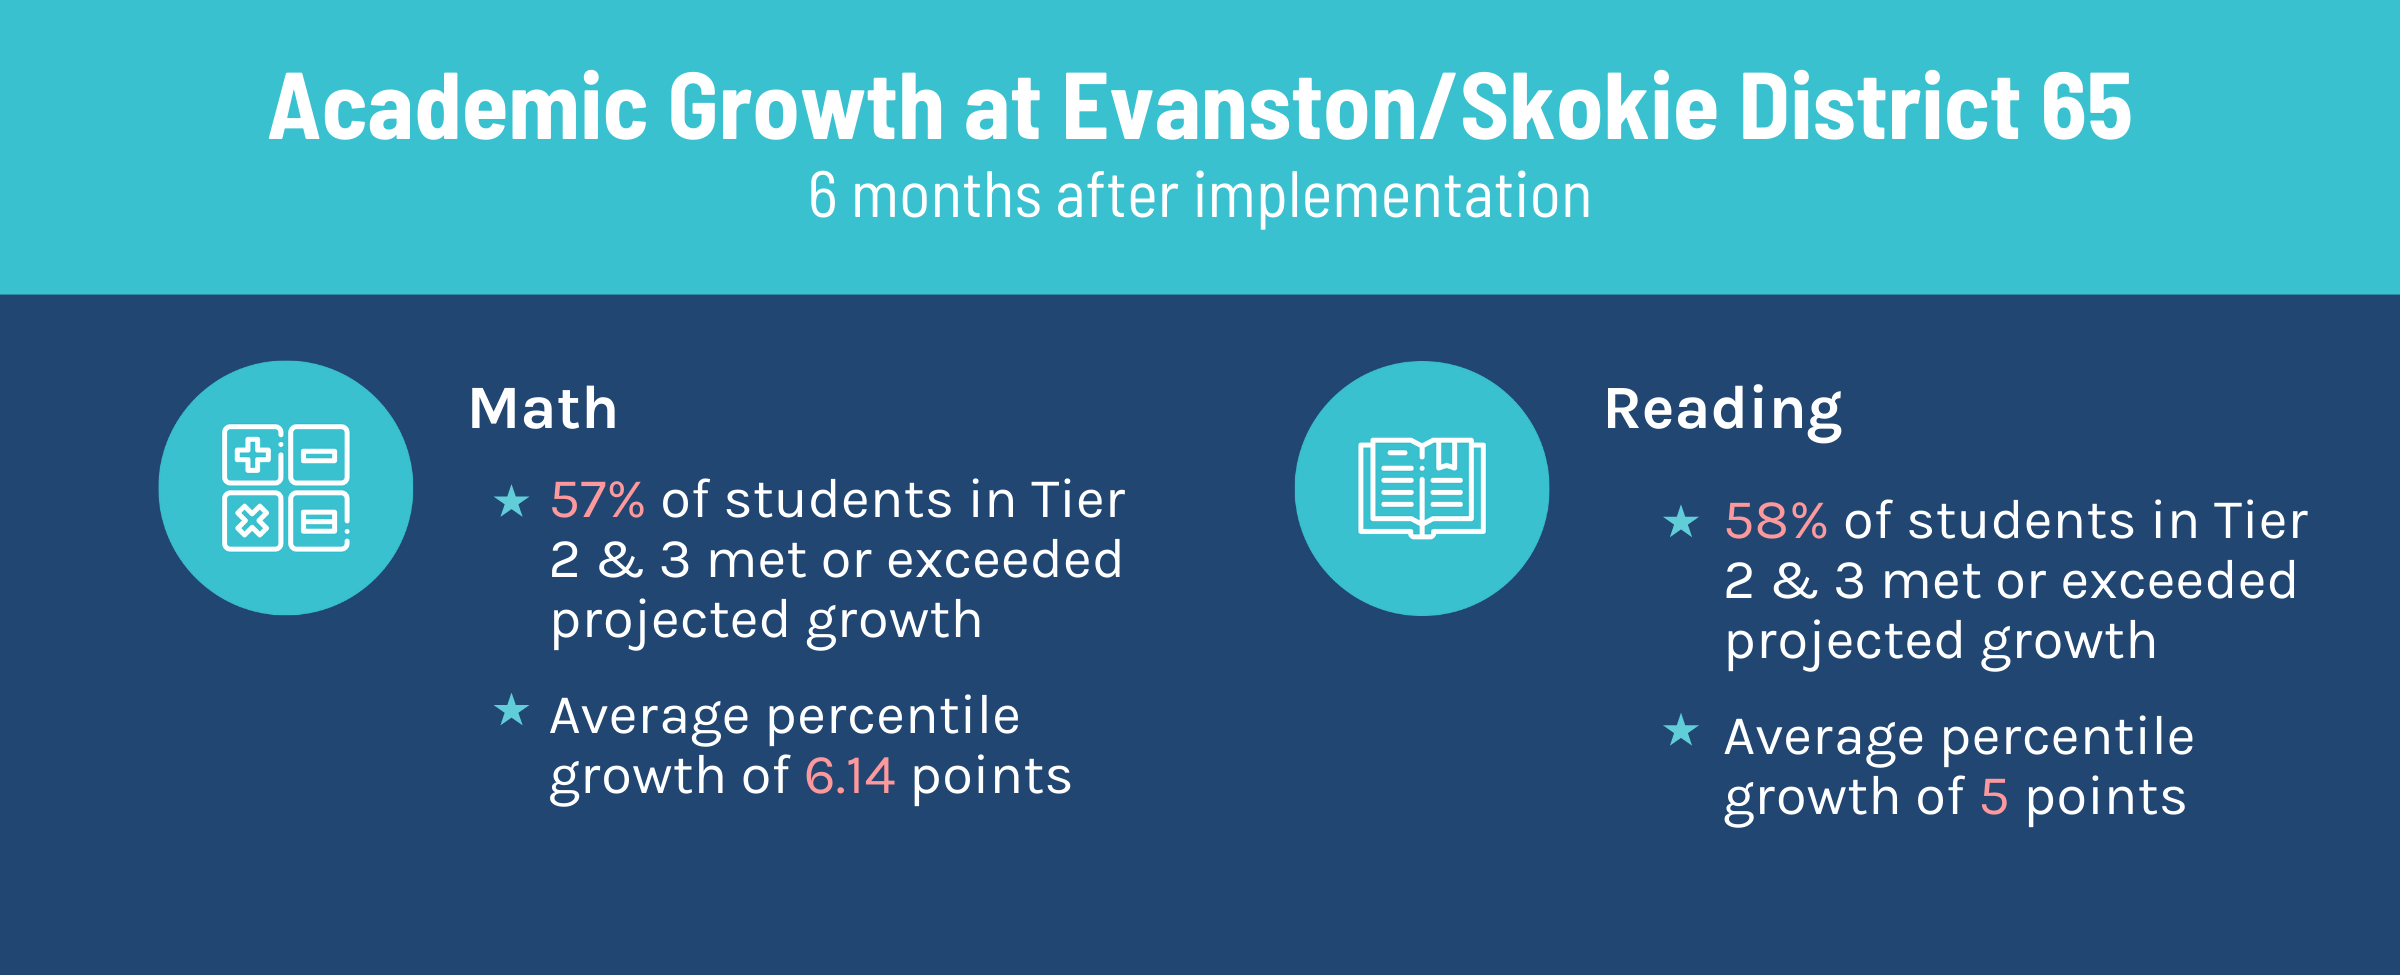 academic-growth-evanston-skokie